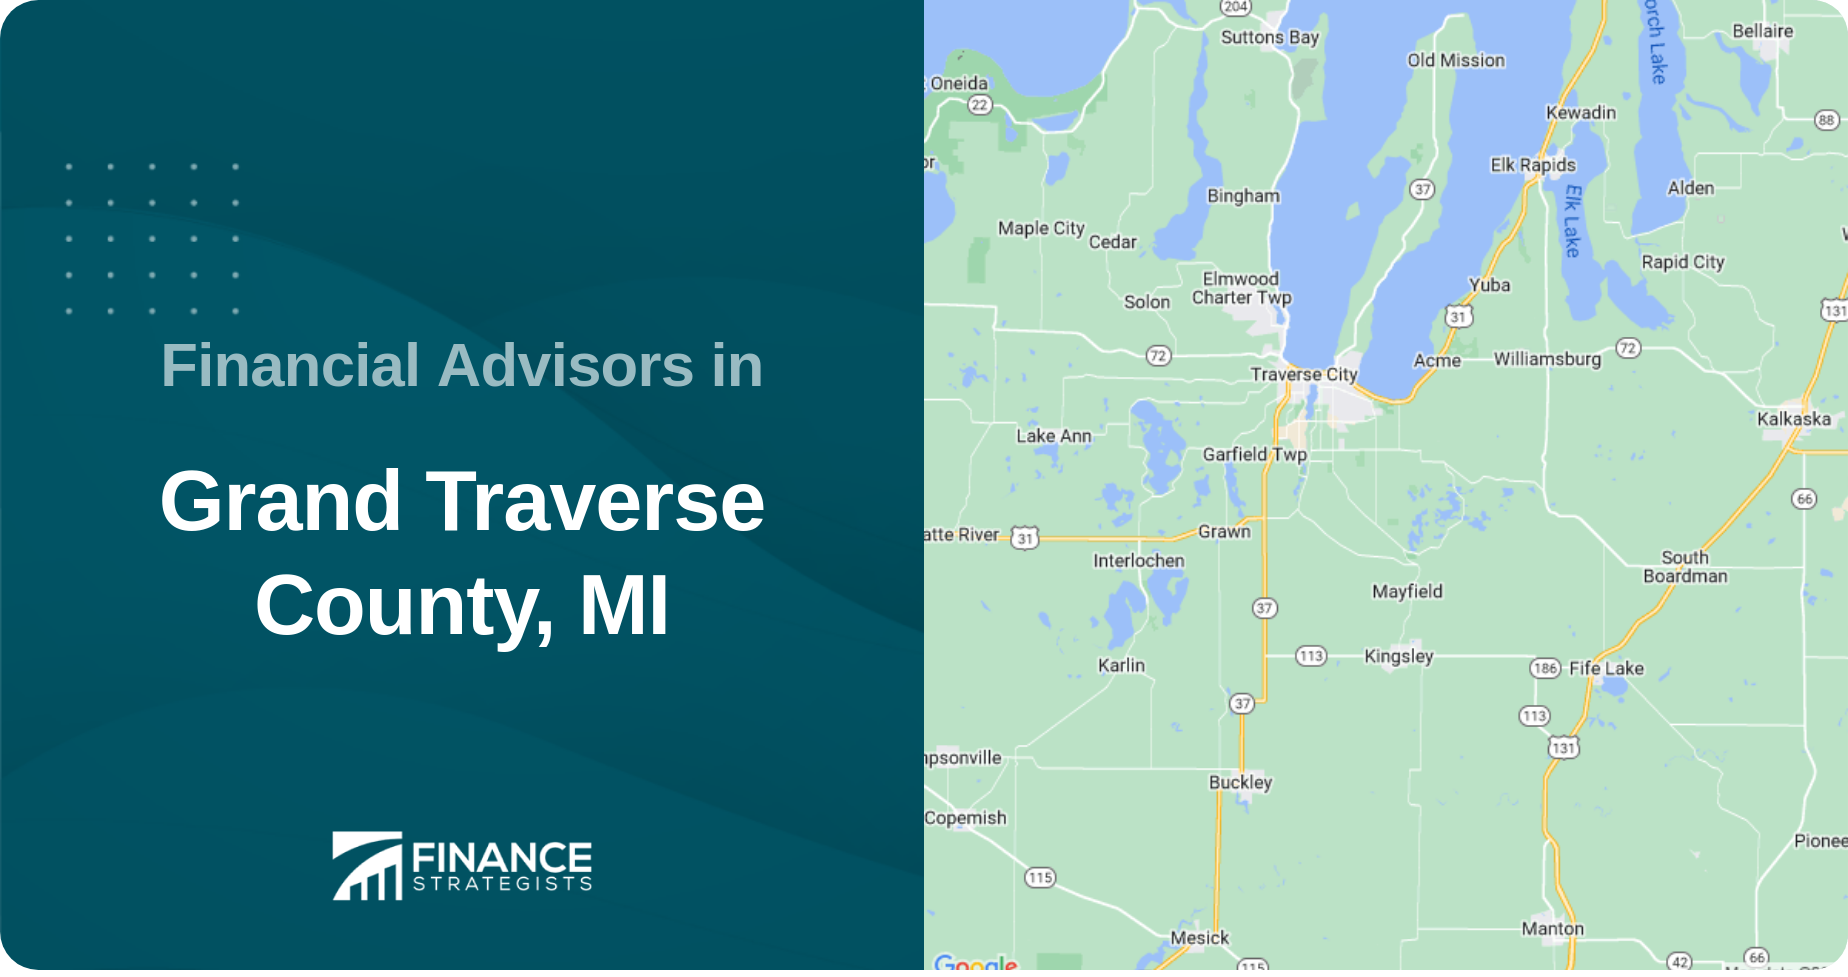 Financial Advisors in Grand Traverse County, MI